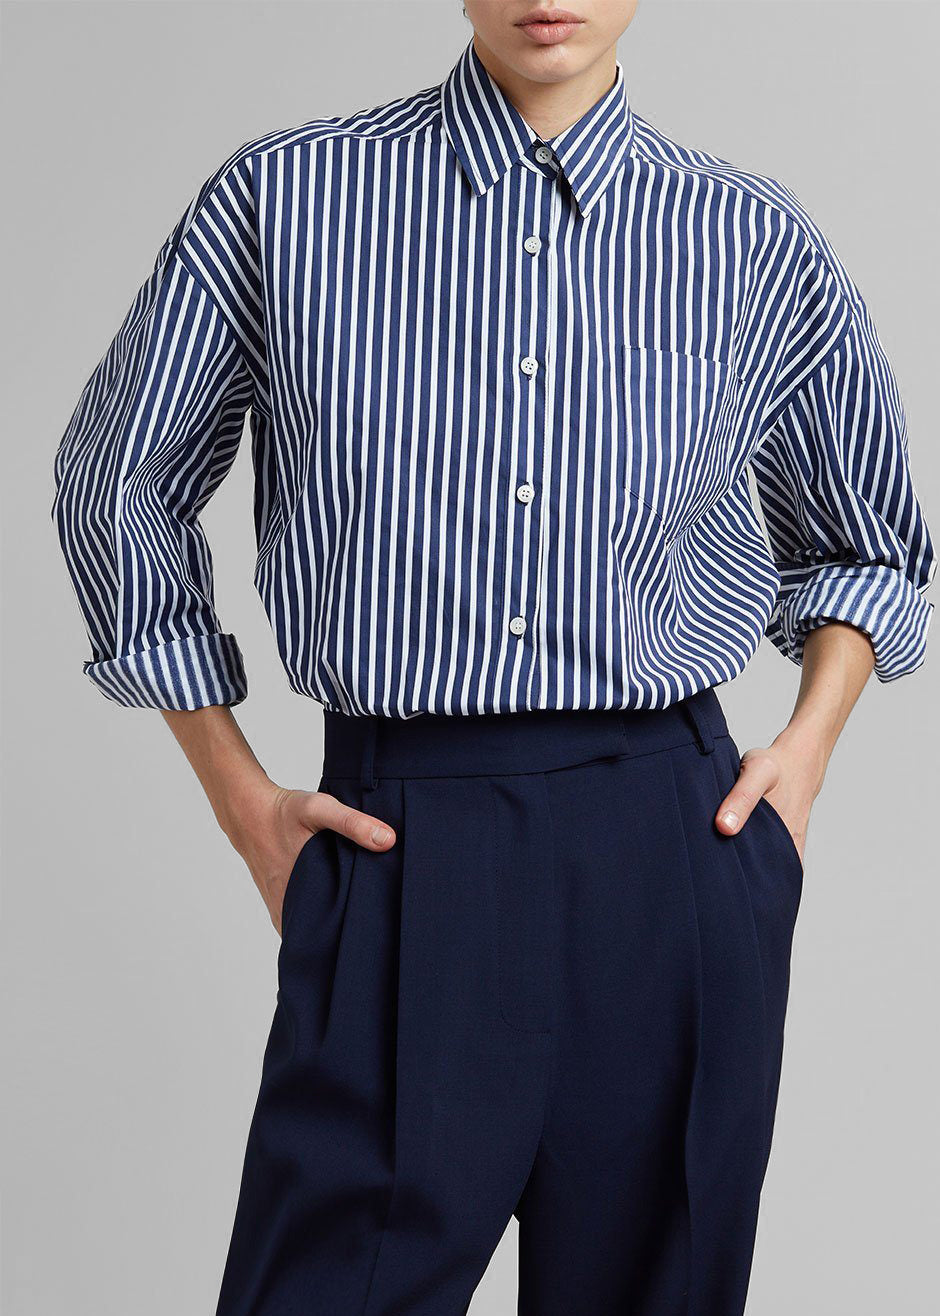 Melody Cotton Shirt - Navy Stripe - 1